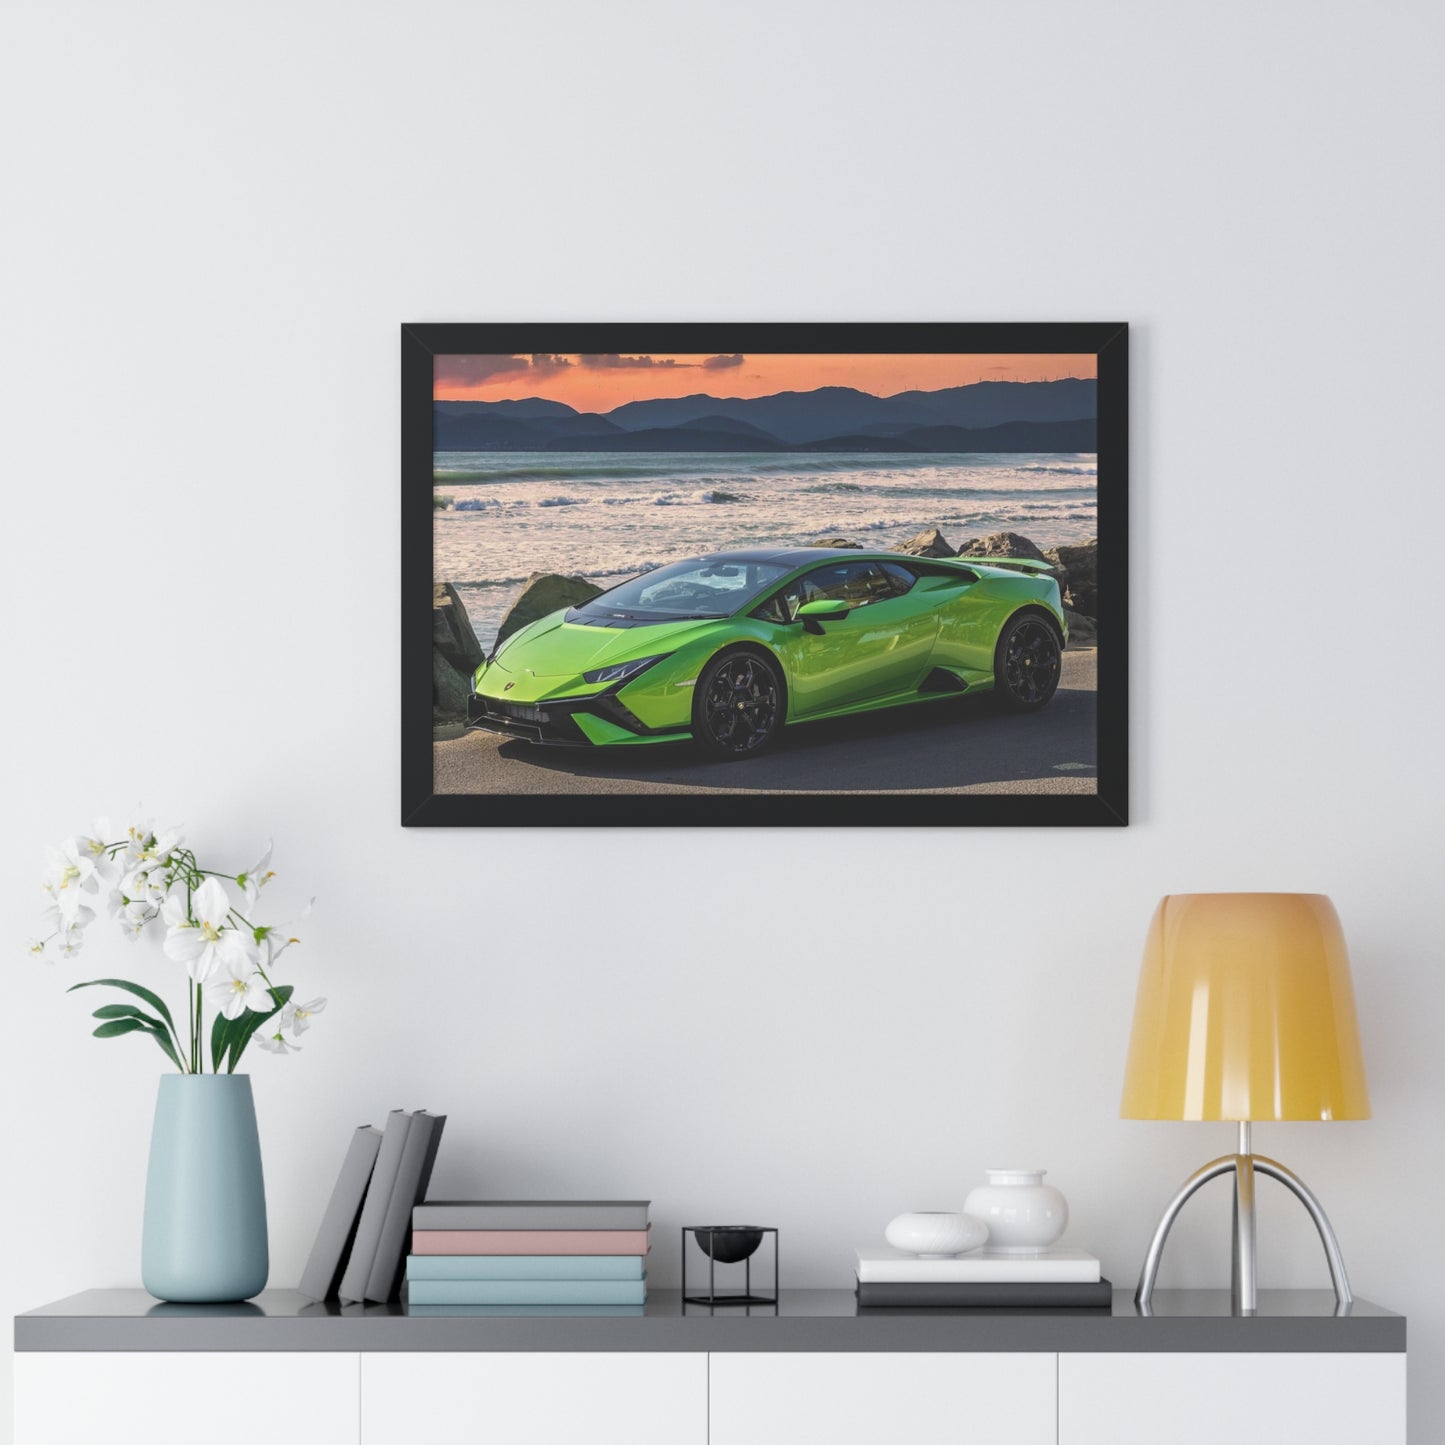 "Tecnica" 30" x 20" Framed Lamborghini Poster